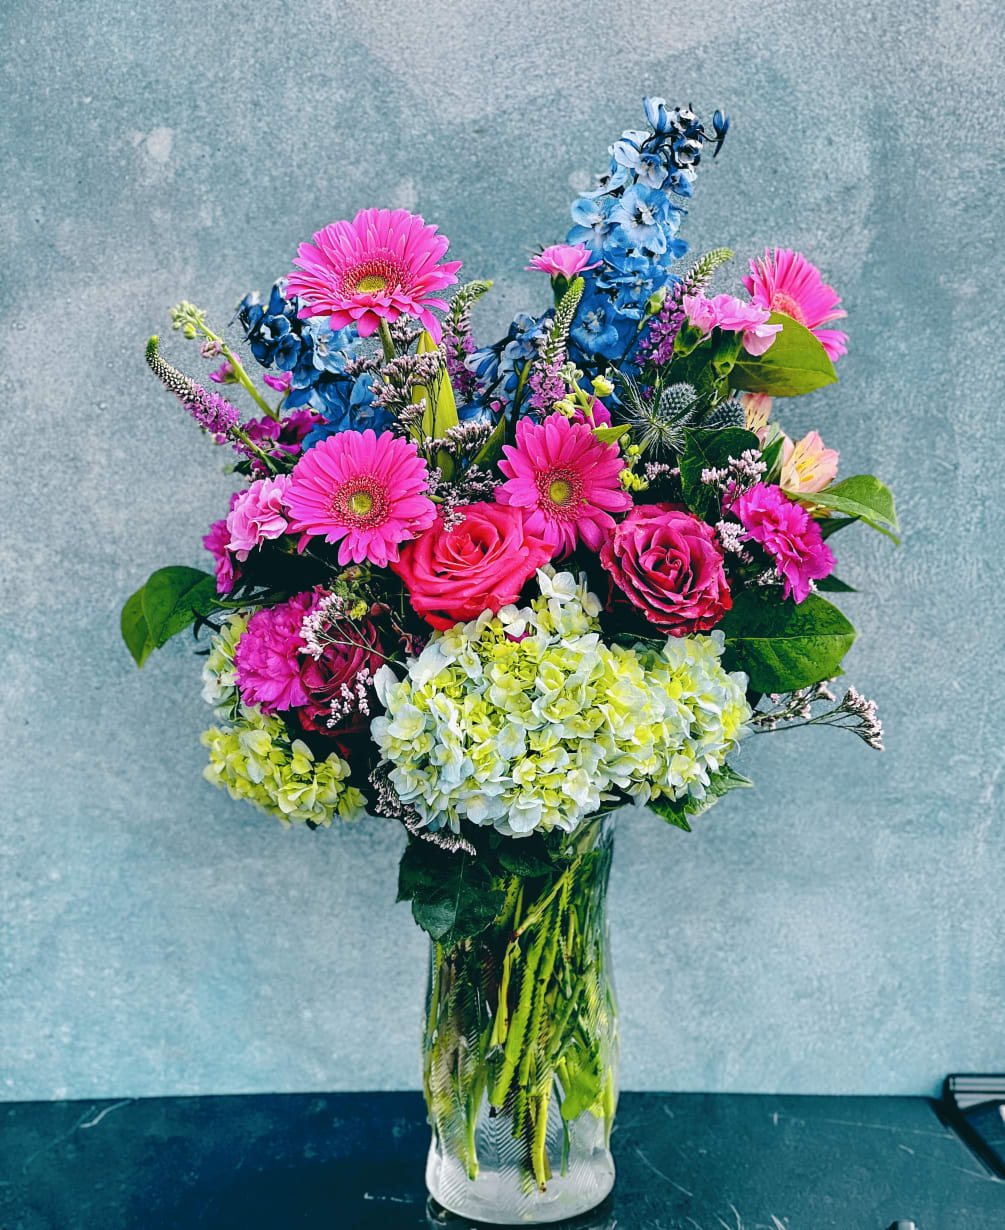 Colorful blooms designed in heighten vase. 

Hydrangeas, Gerber daises, roses , delphiniums